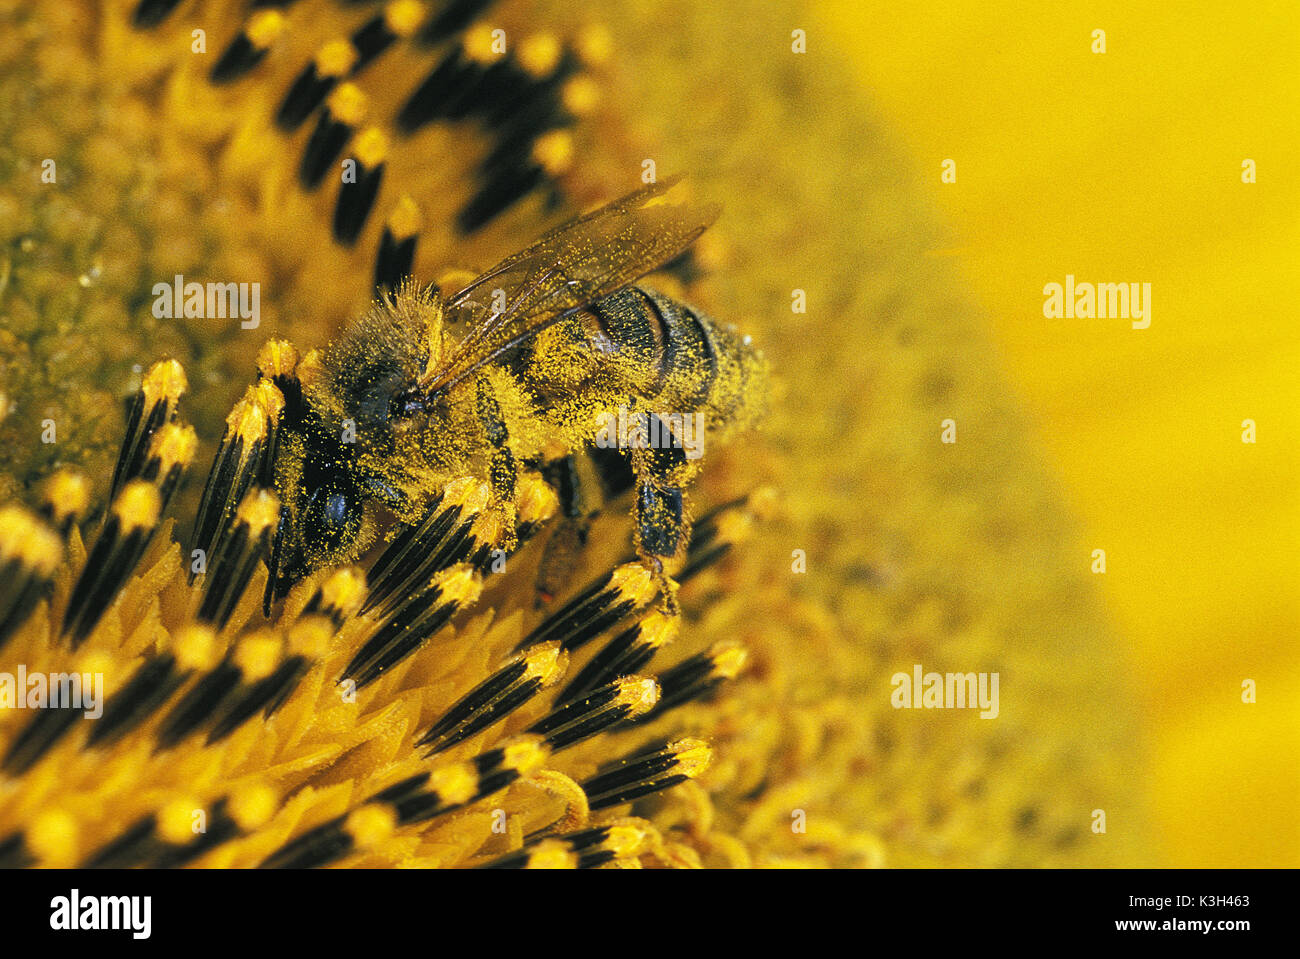 Honey Bee, apis mellifera, Adult on Sunflower, Pollen on its Body, close-up Stock Photo